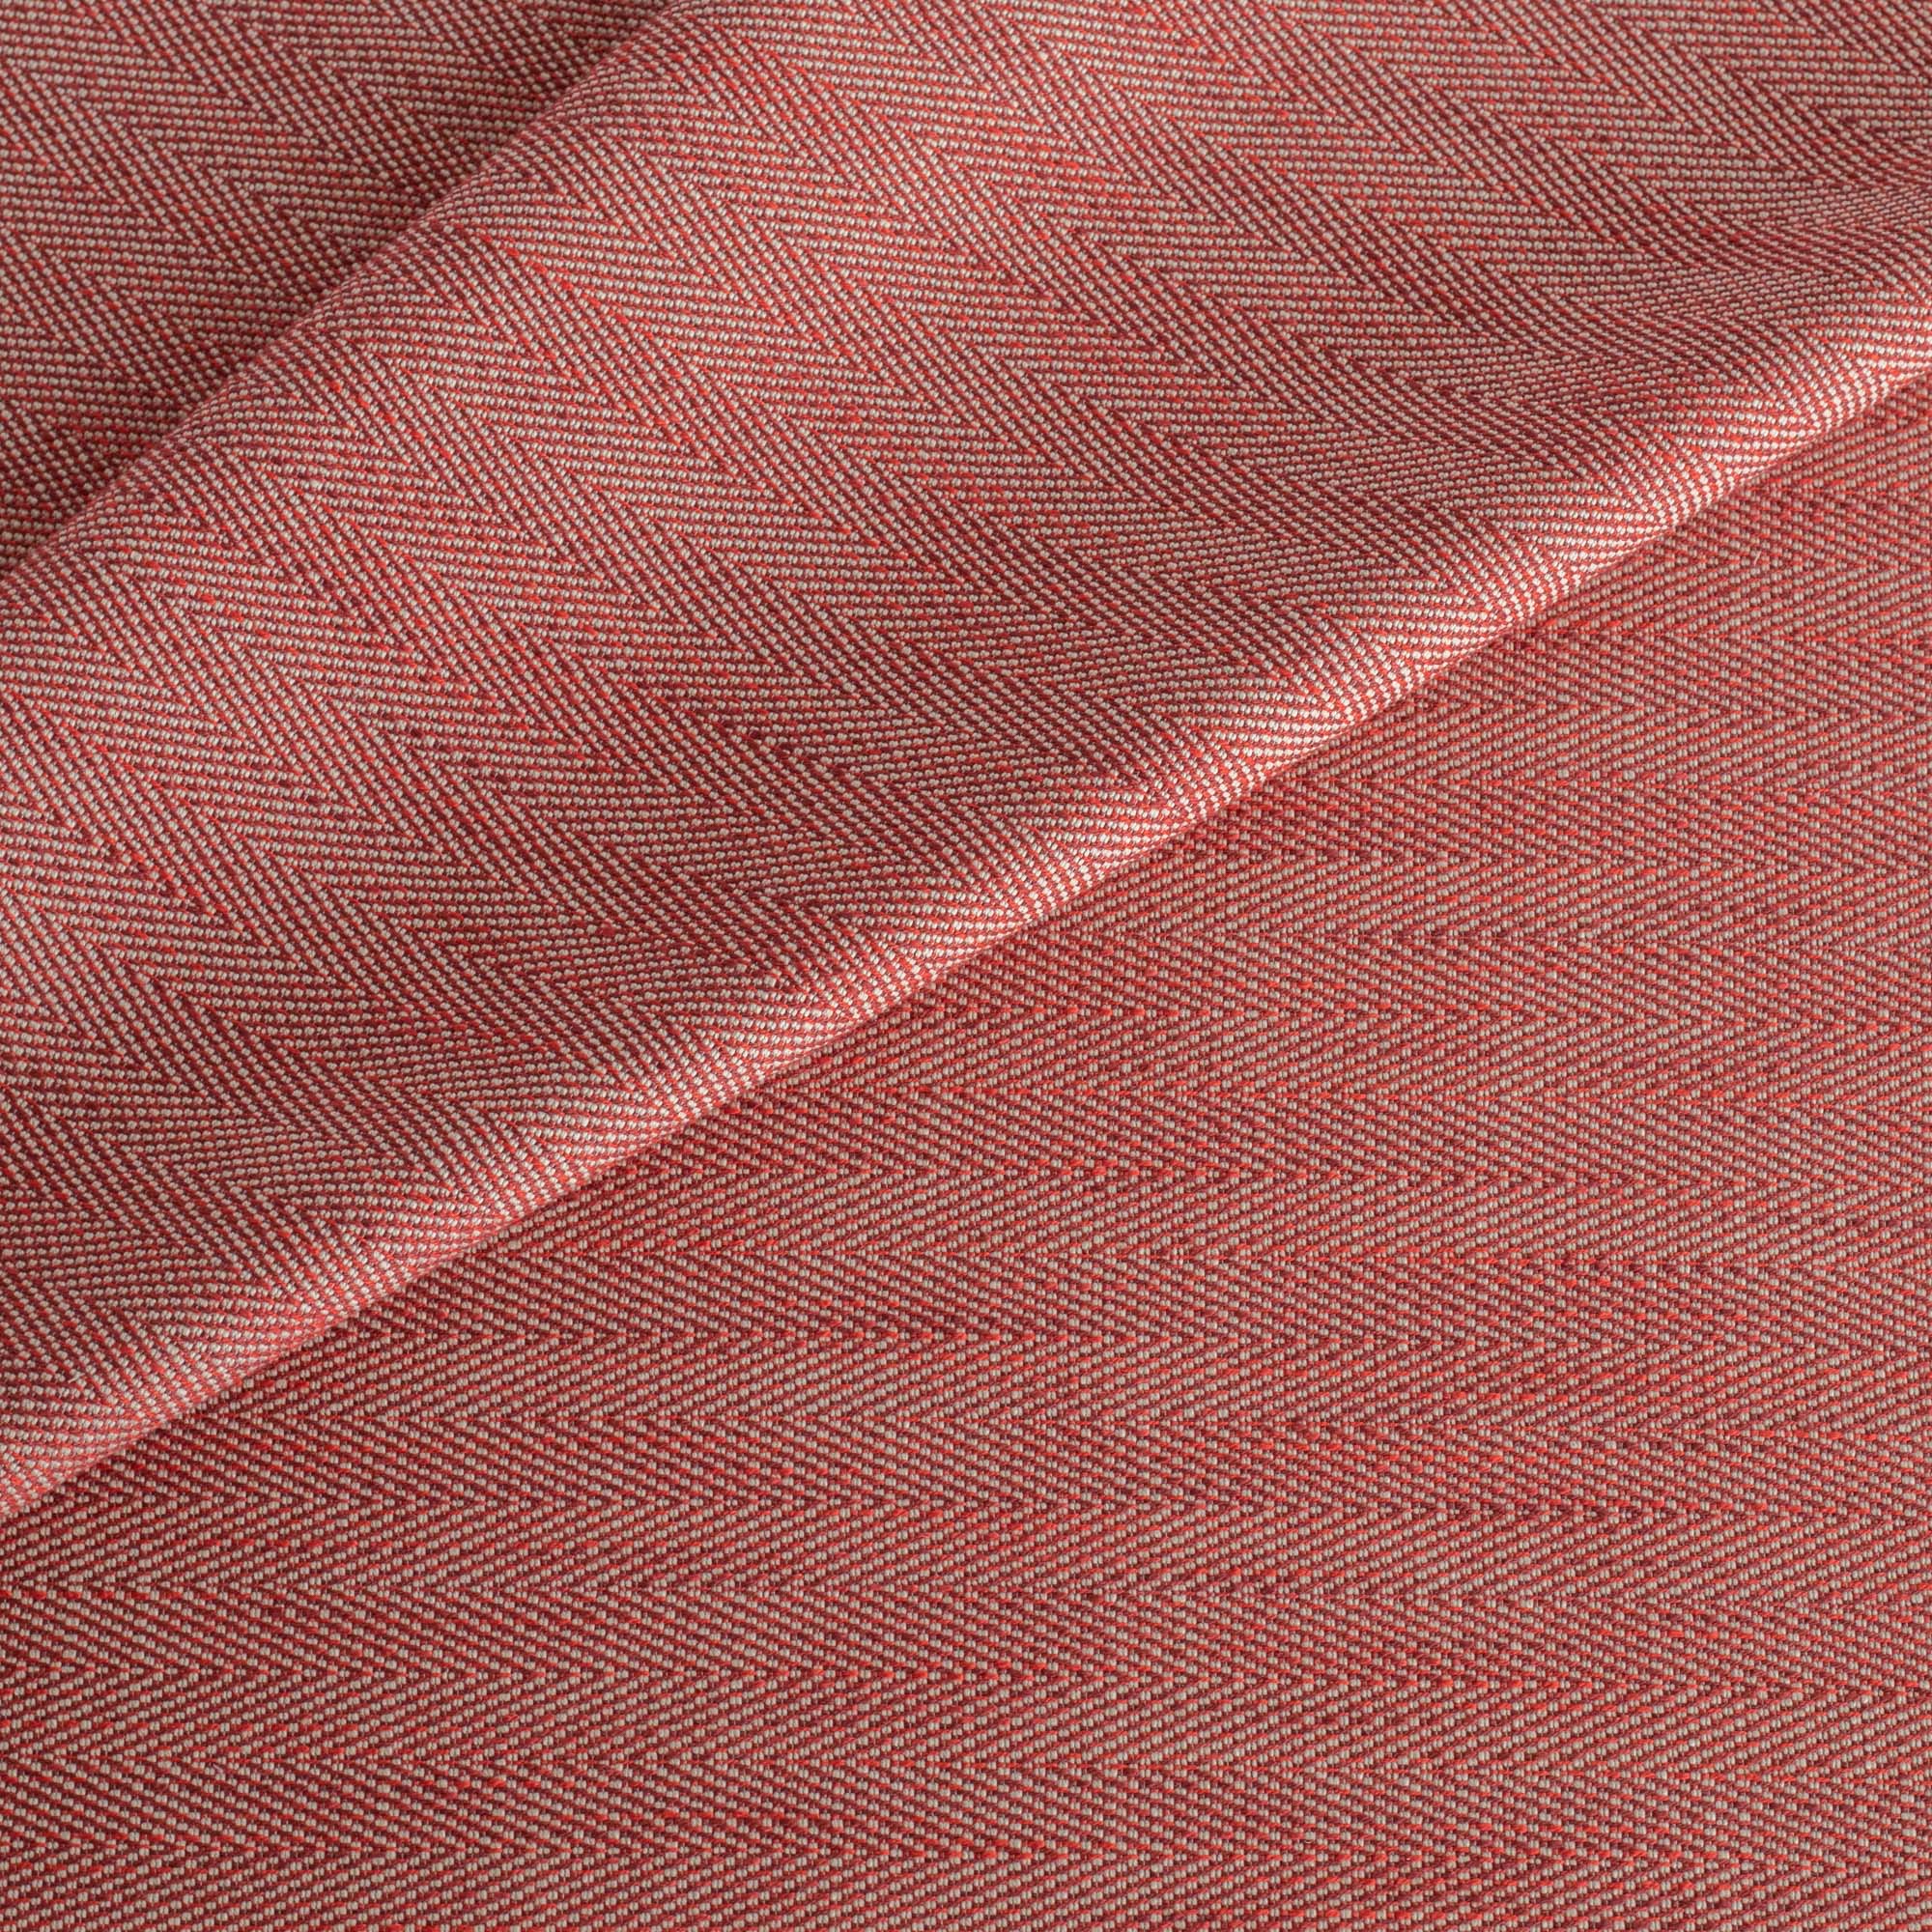 Molino red herringbone indoor outdoor fabric from Tonic Living